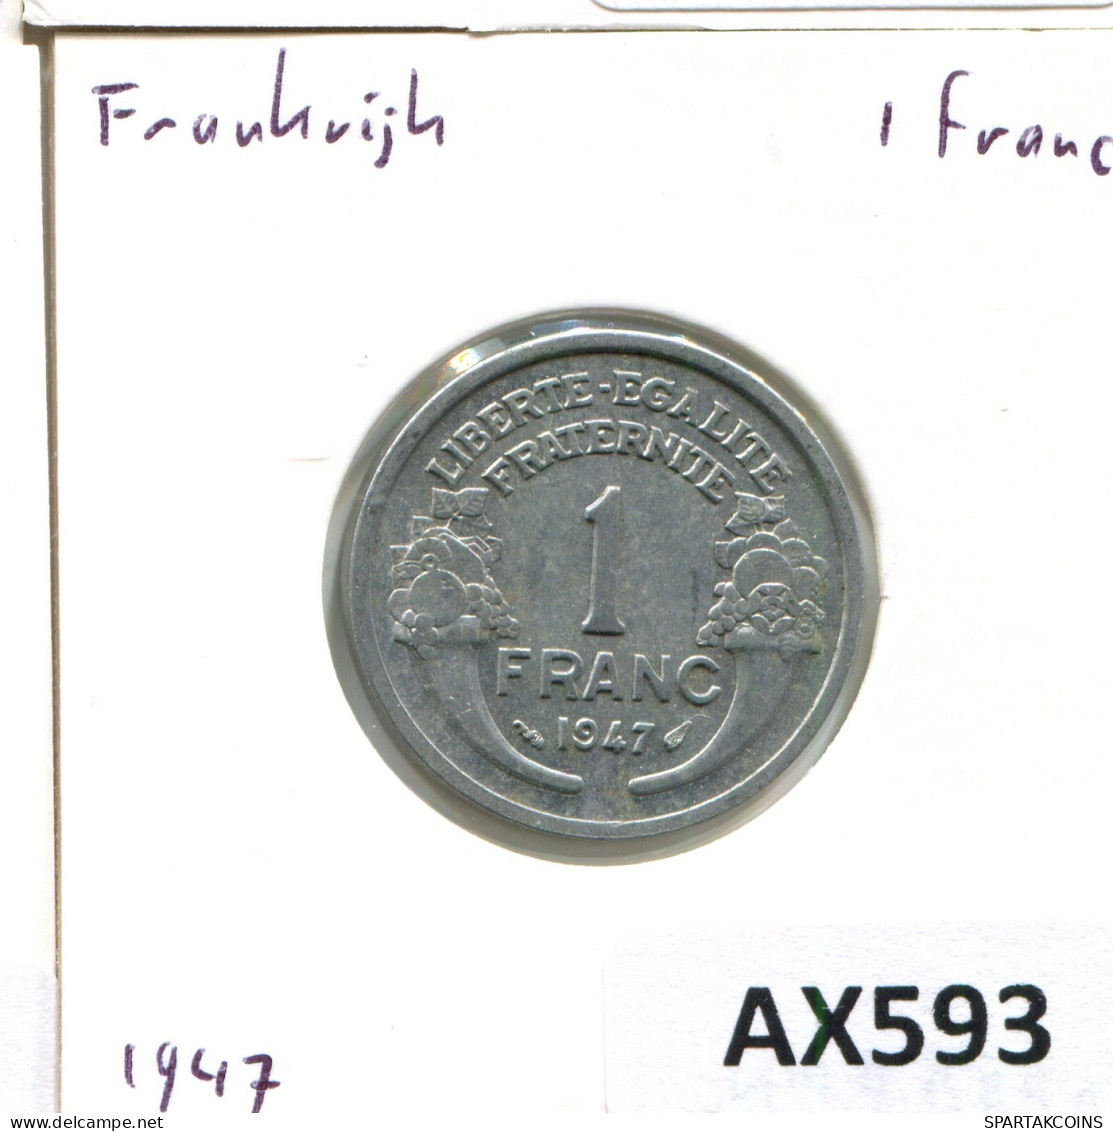 1 FRANC 1947 FRANCE Coin #AX593 - 1 Franc